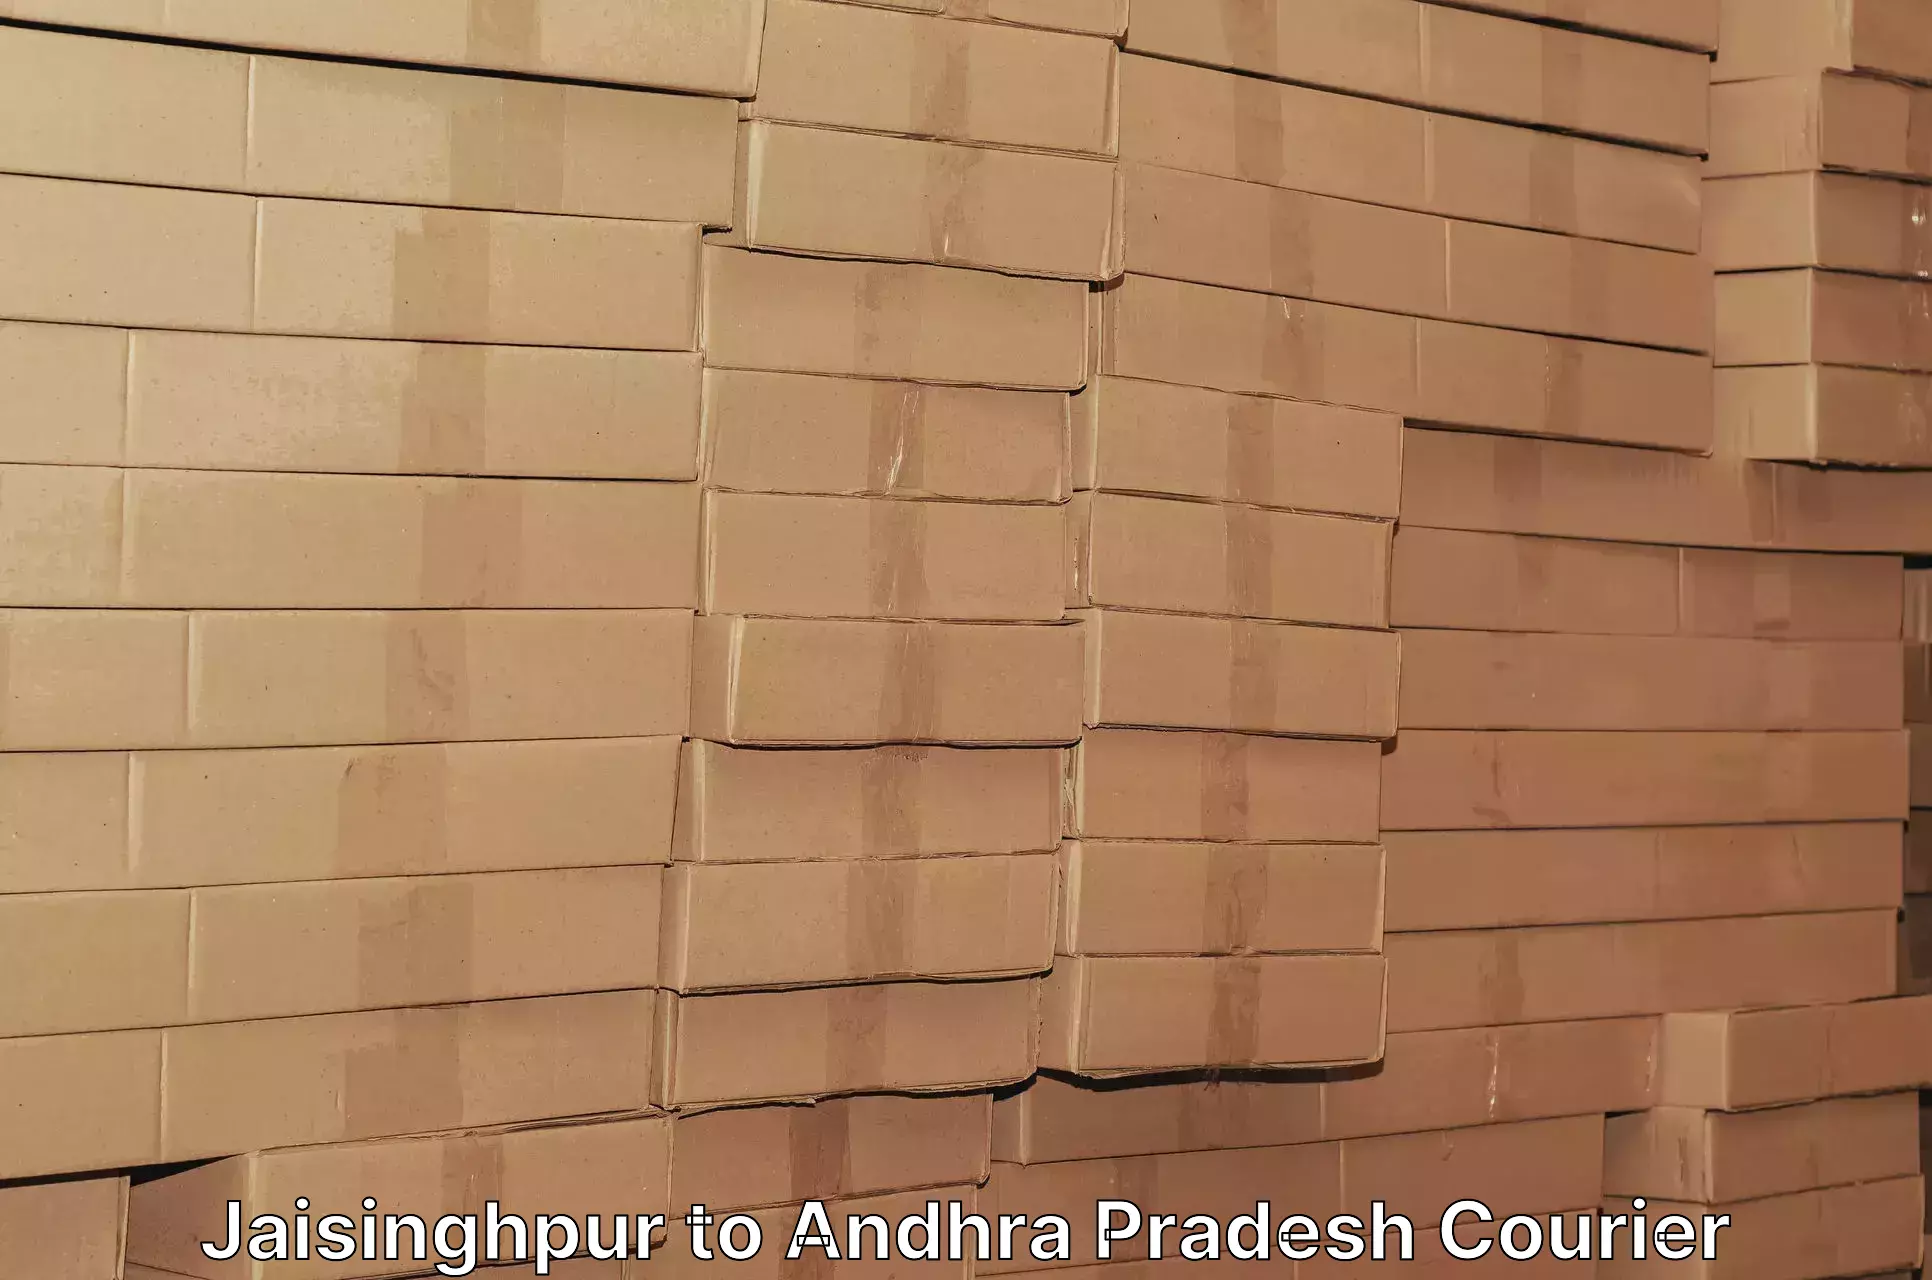 Express courier facilities Jaisinghpur to Ponnur